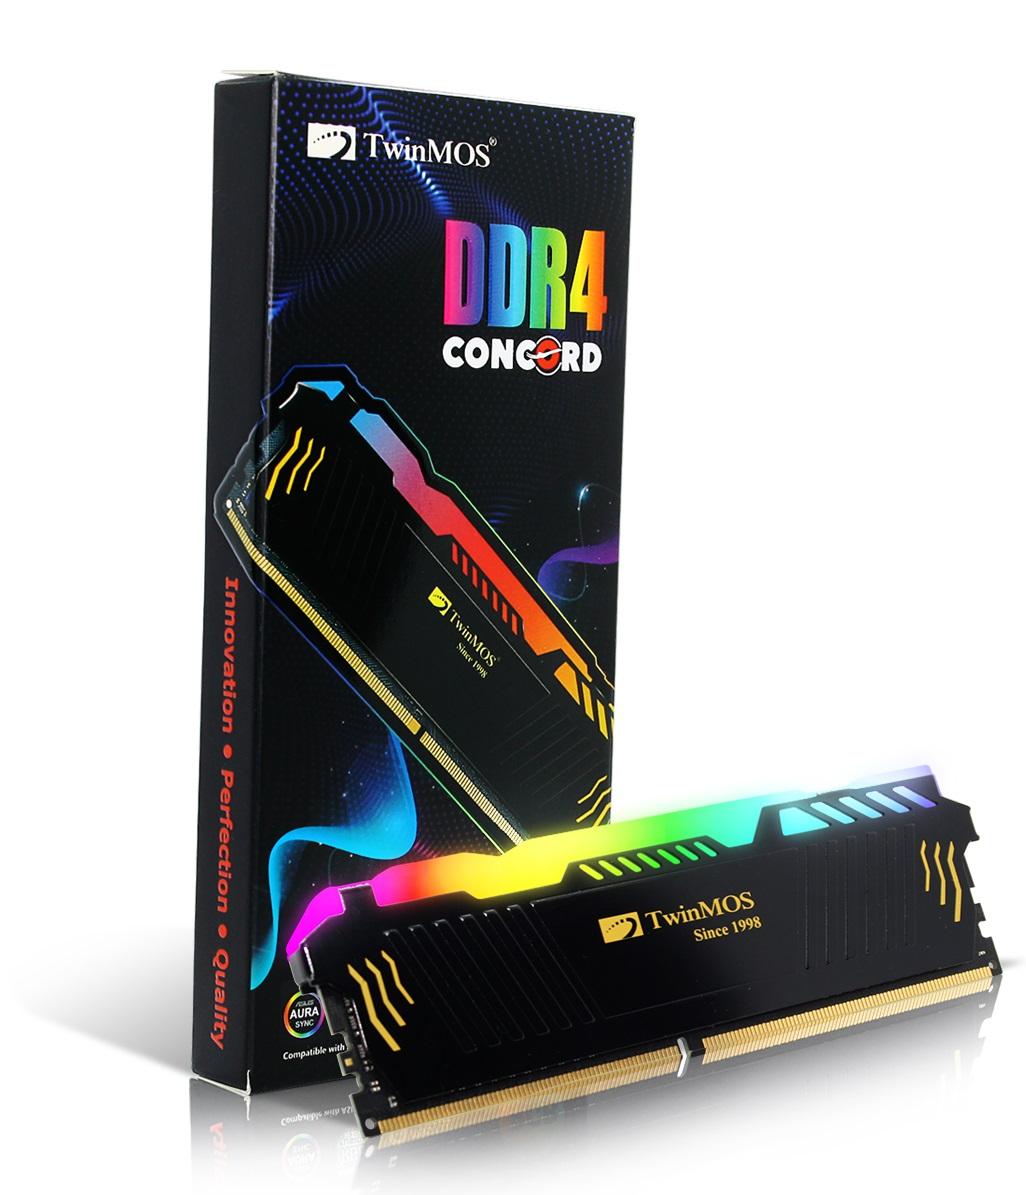 TwinMOS DDR4 Concord RGB Gaming DRAM For Desktop